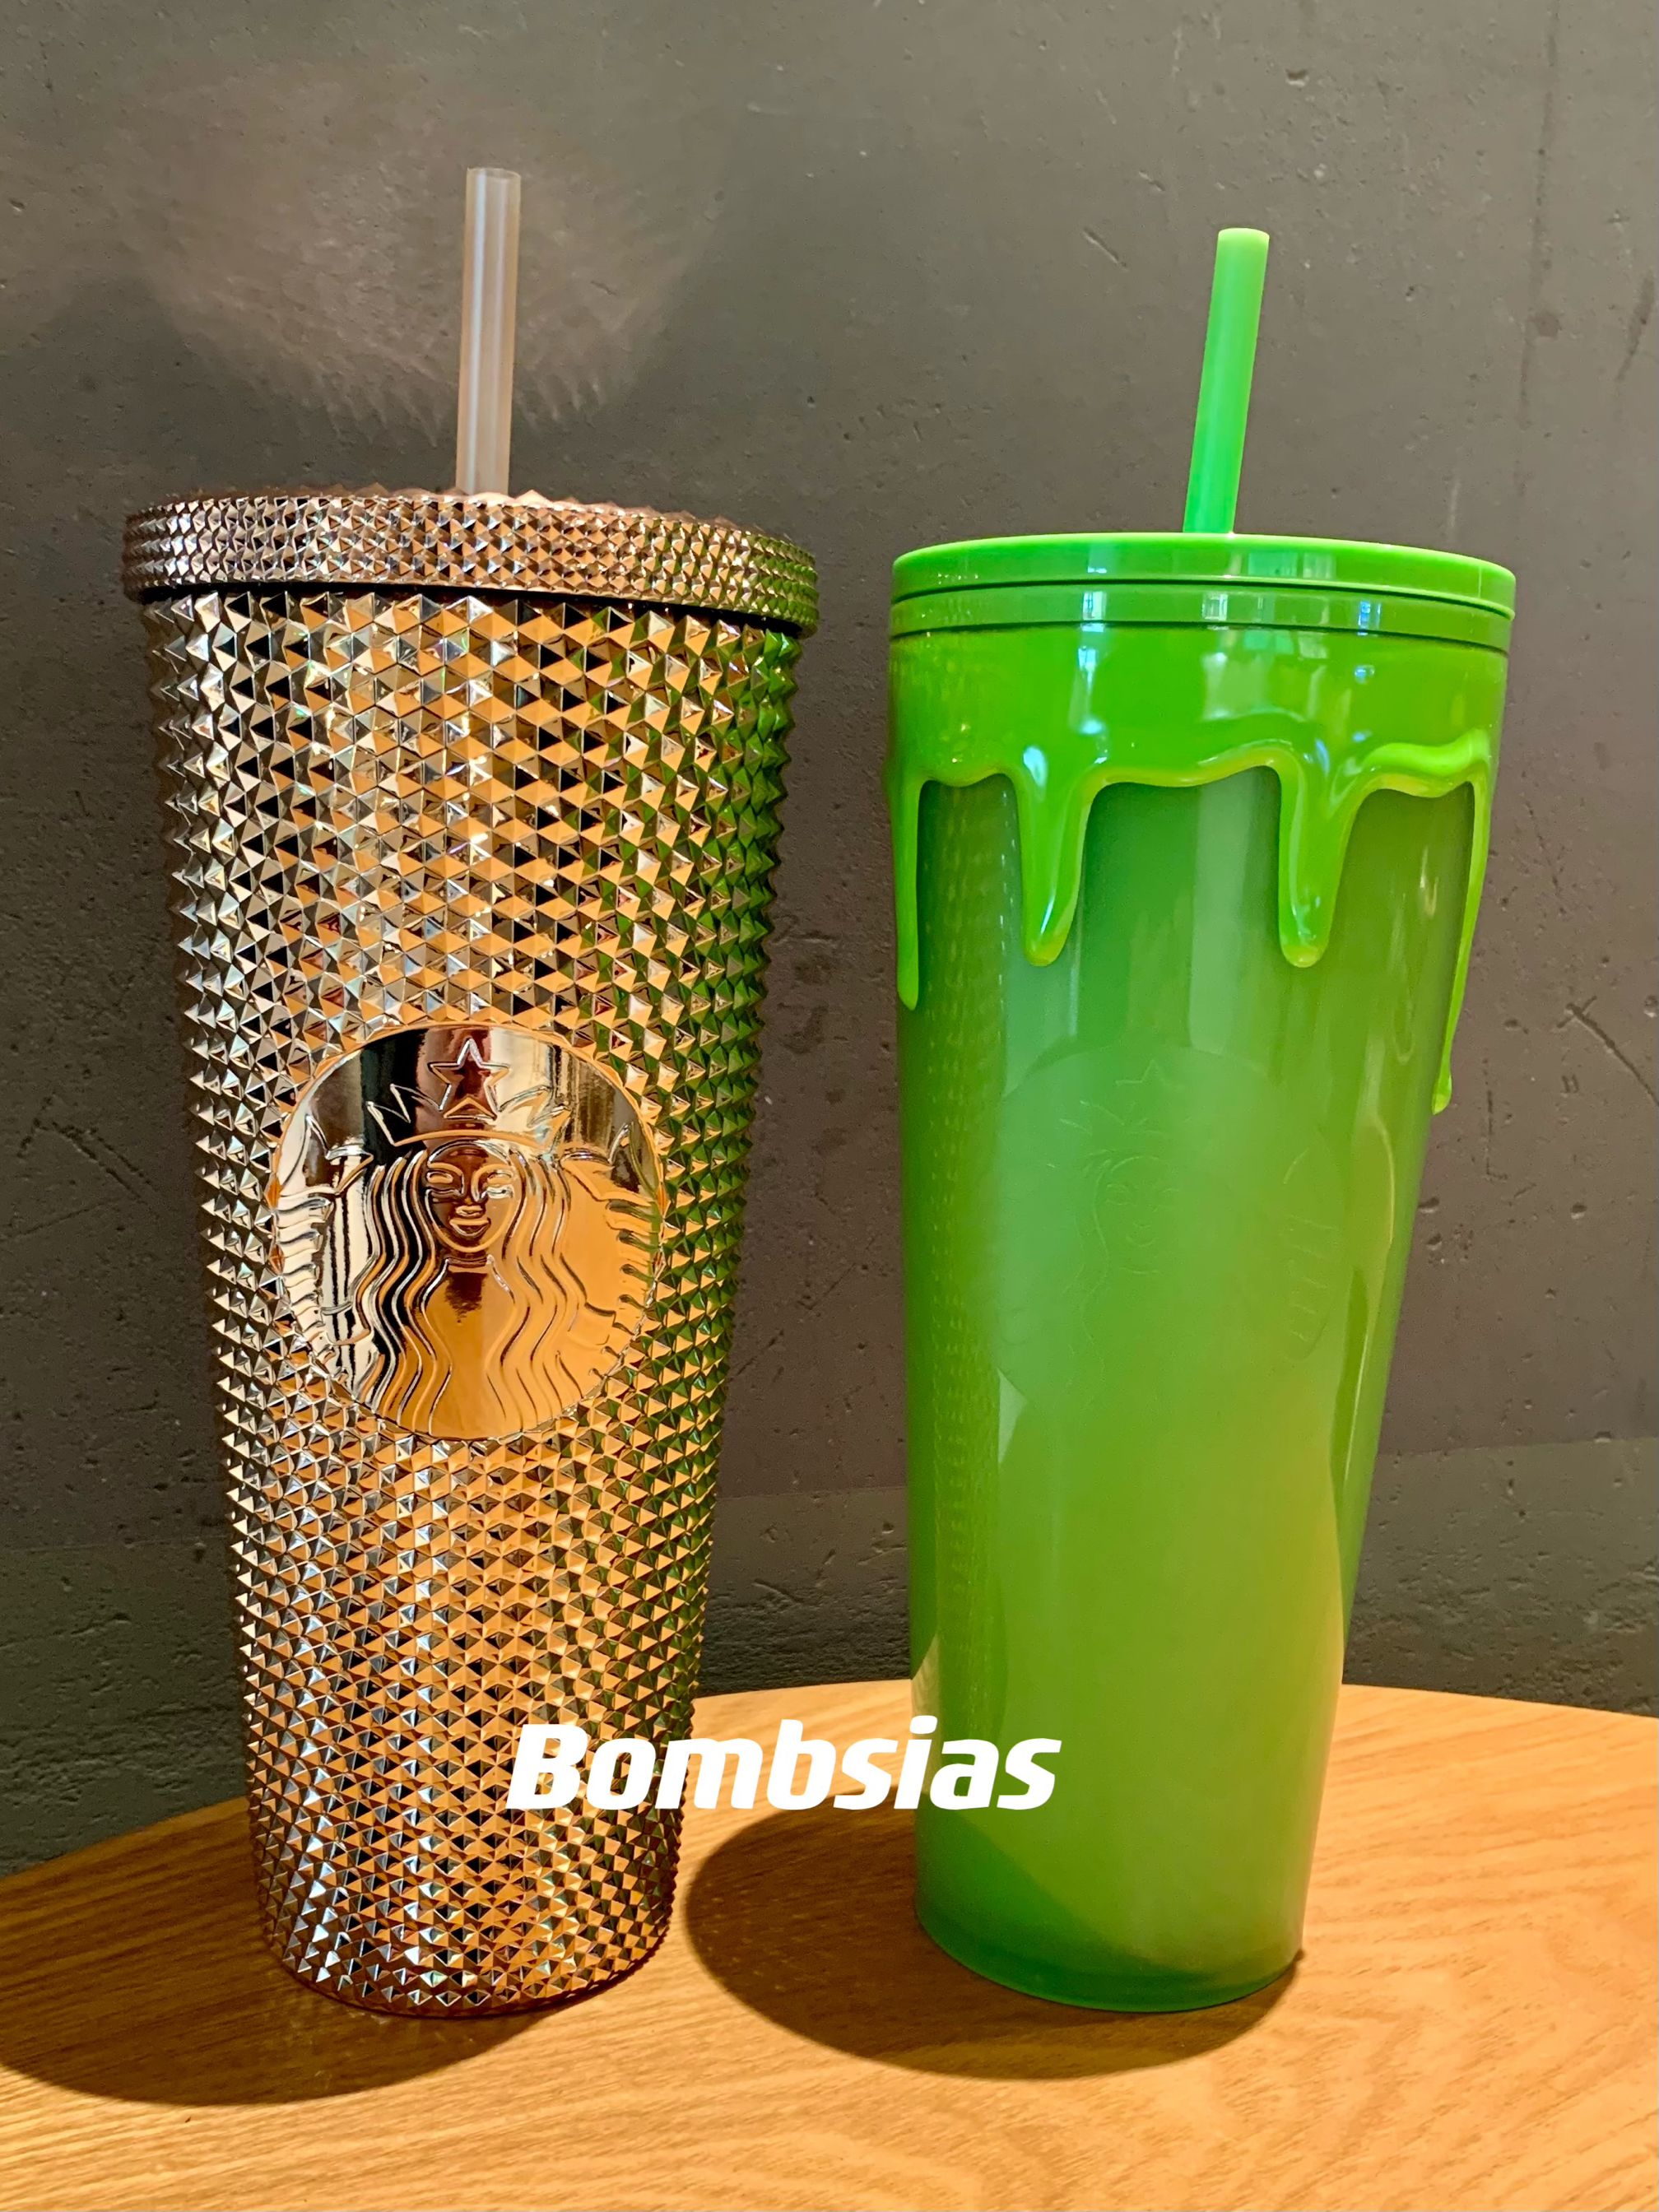 Starbucks Hong Kong - 16oz Pastel Purple & Green Stainless Steel Tumbl —  USShoppingSOS